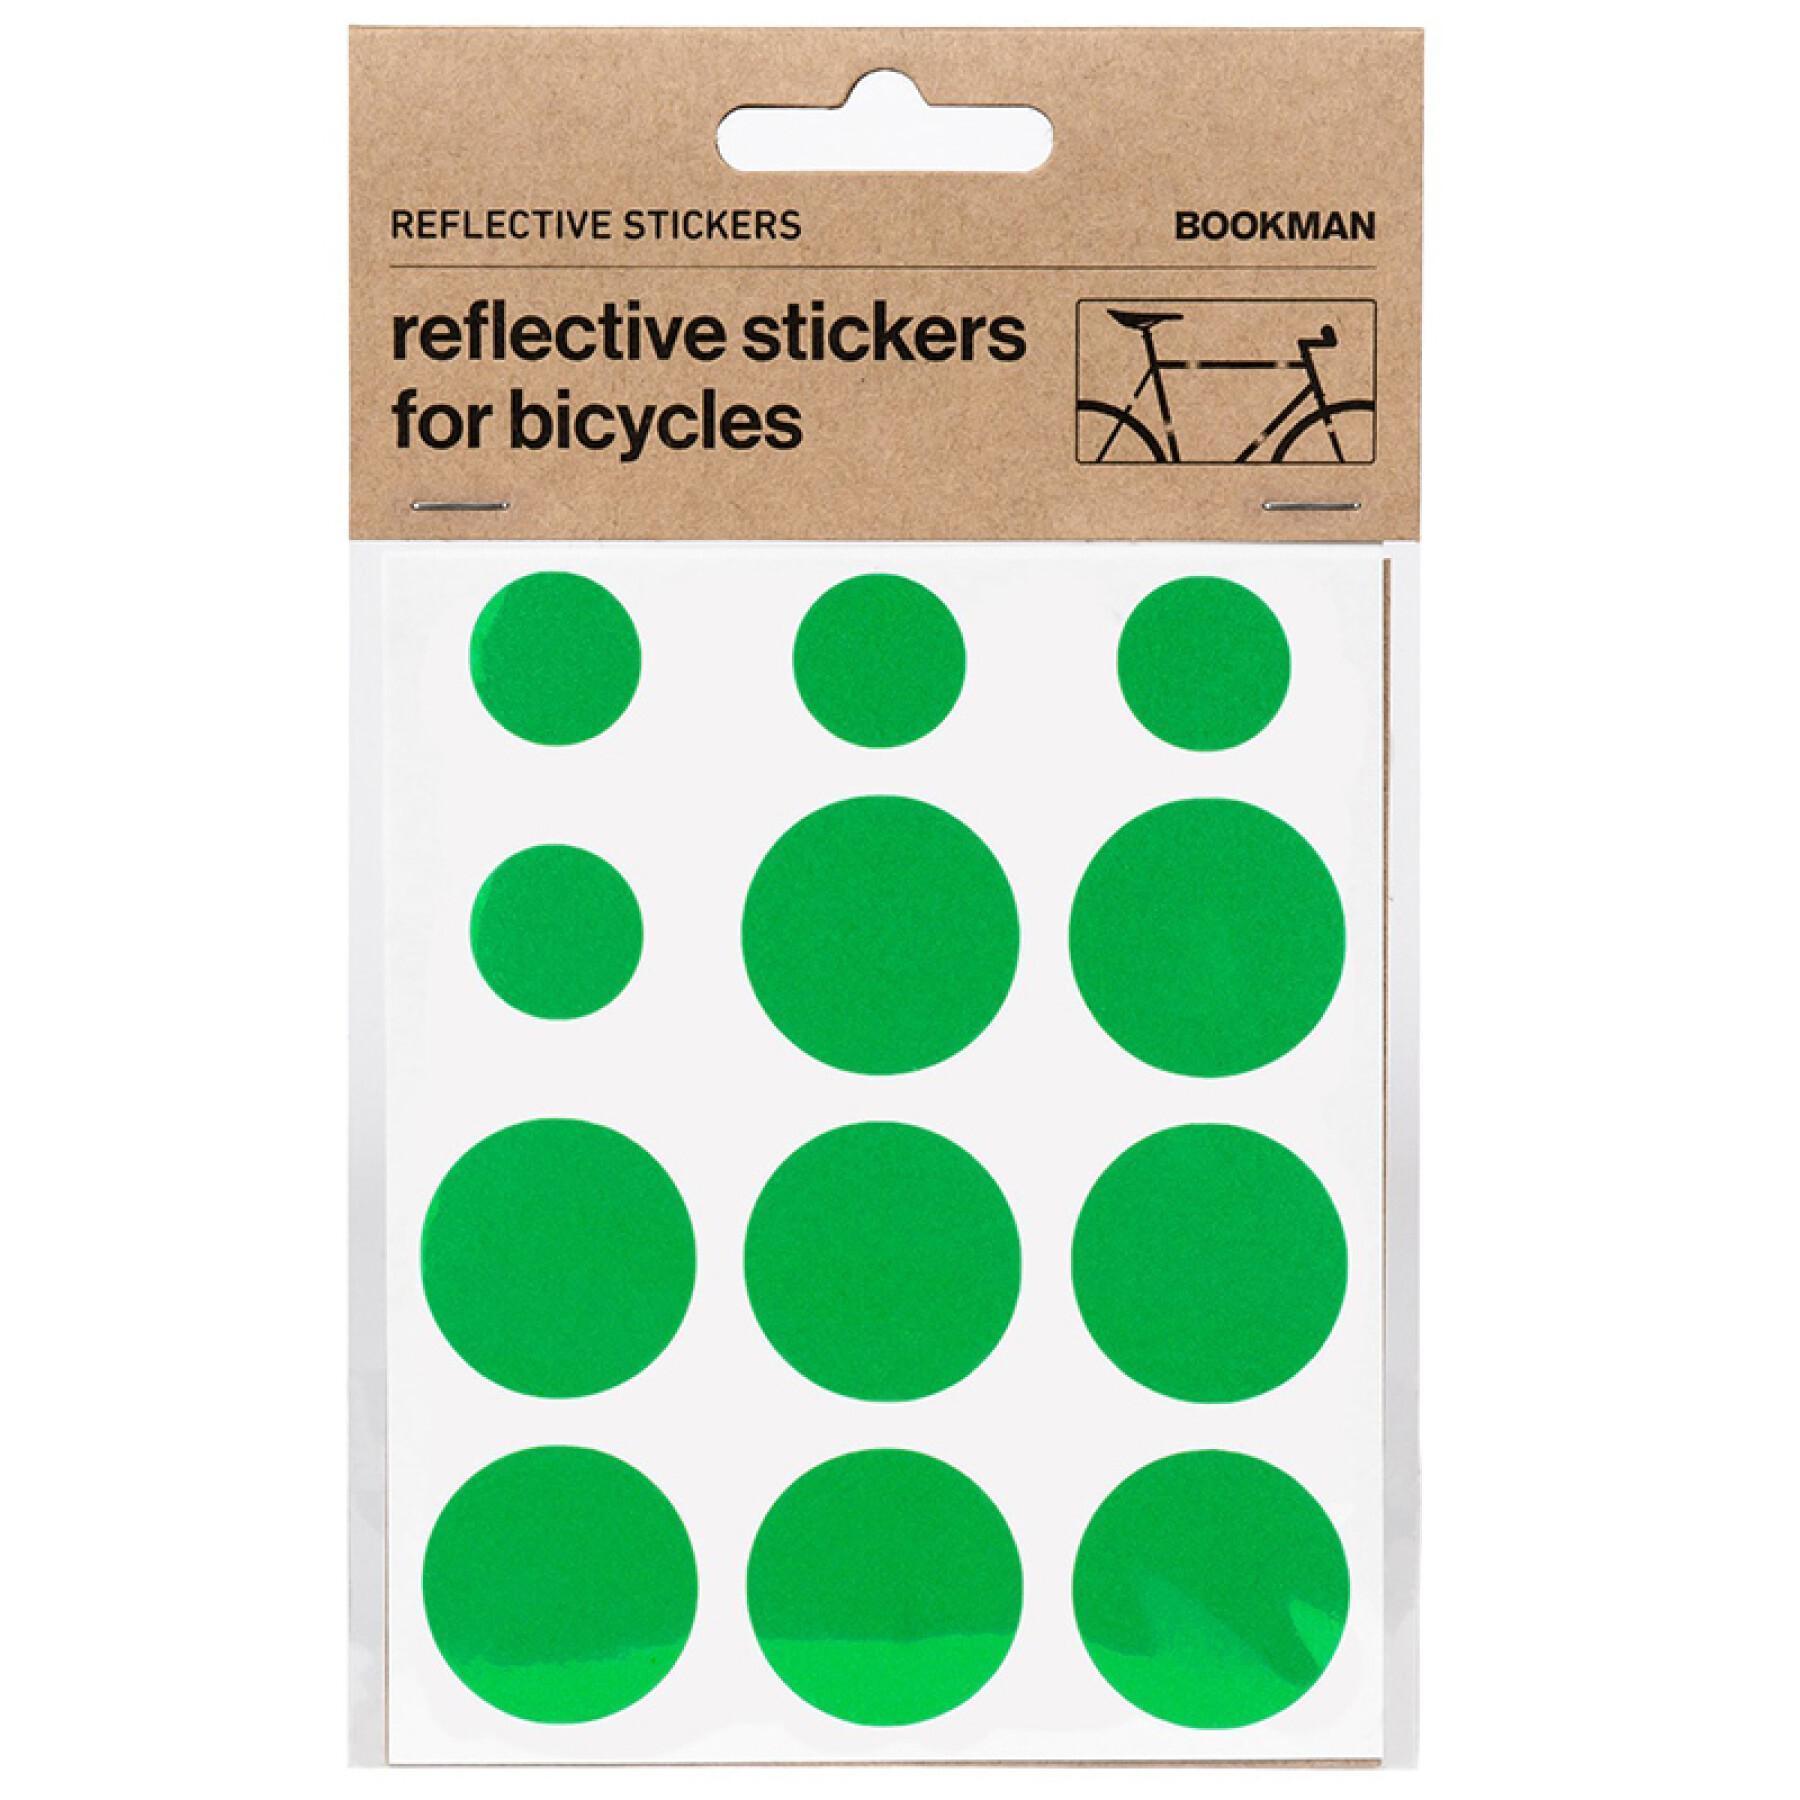 Reflective bike sticker kit Bookman